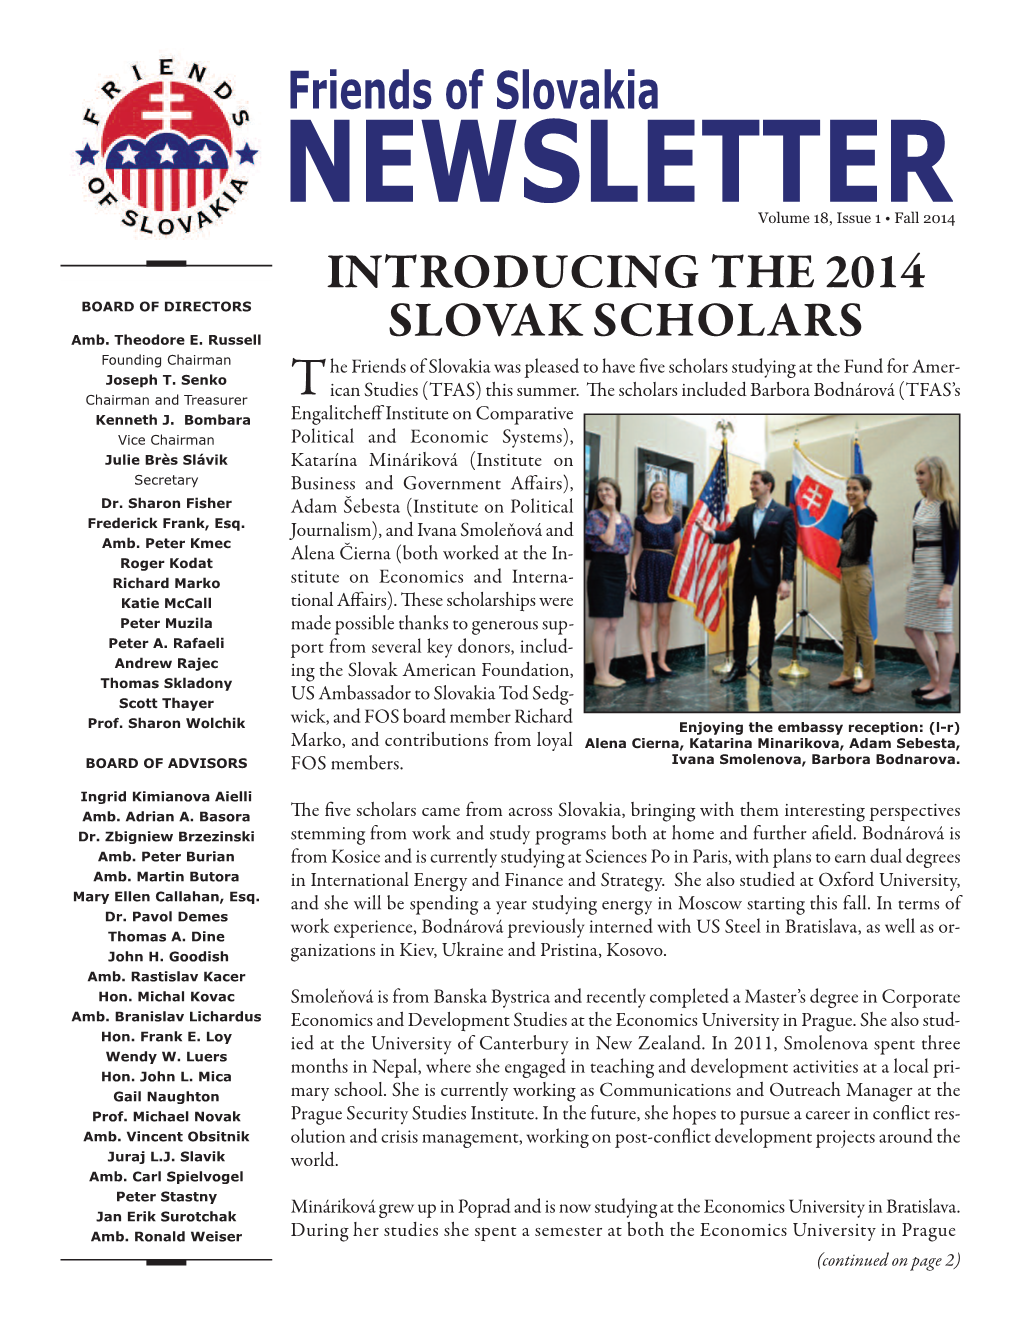 Introducing the 2014 Slovak Scholars